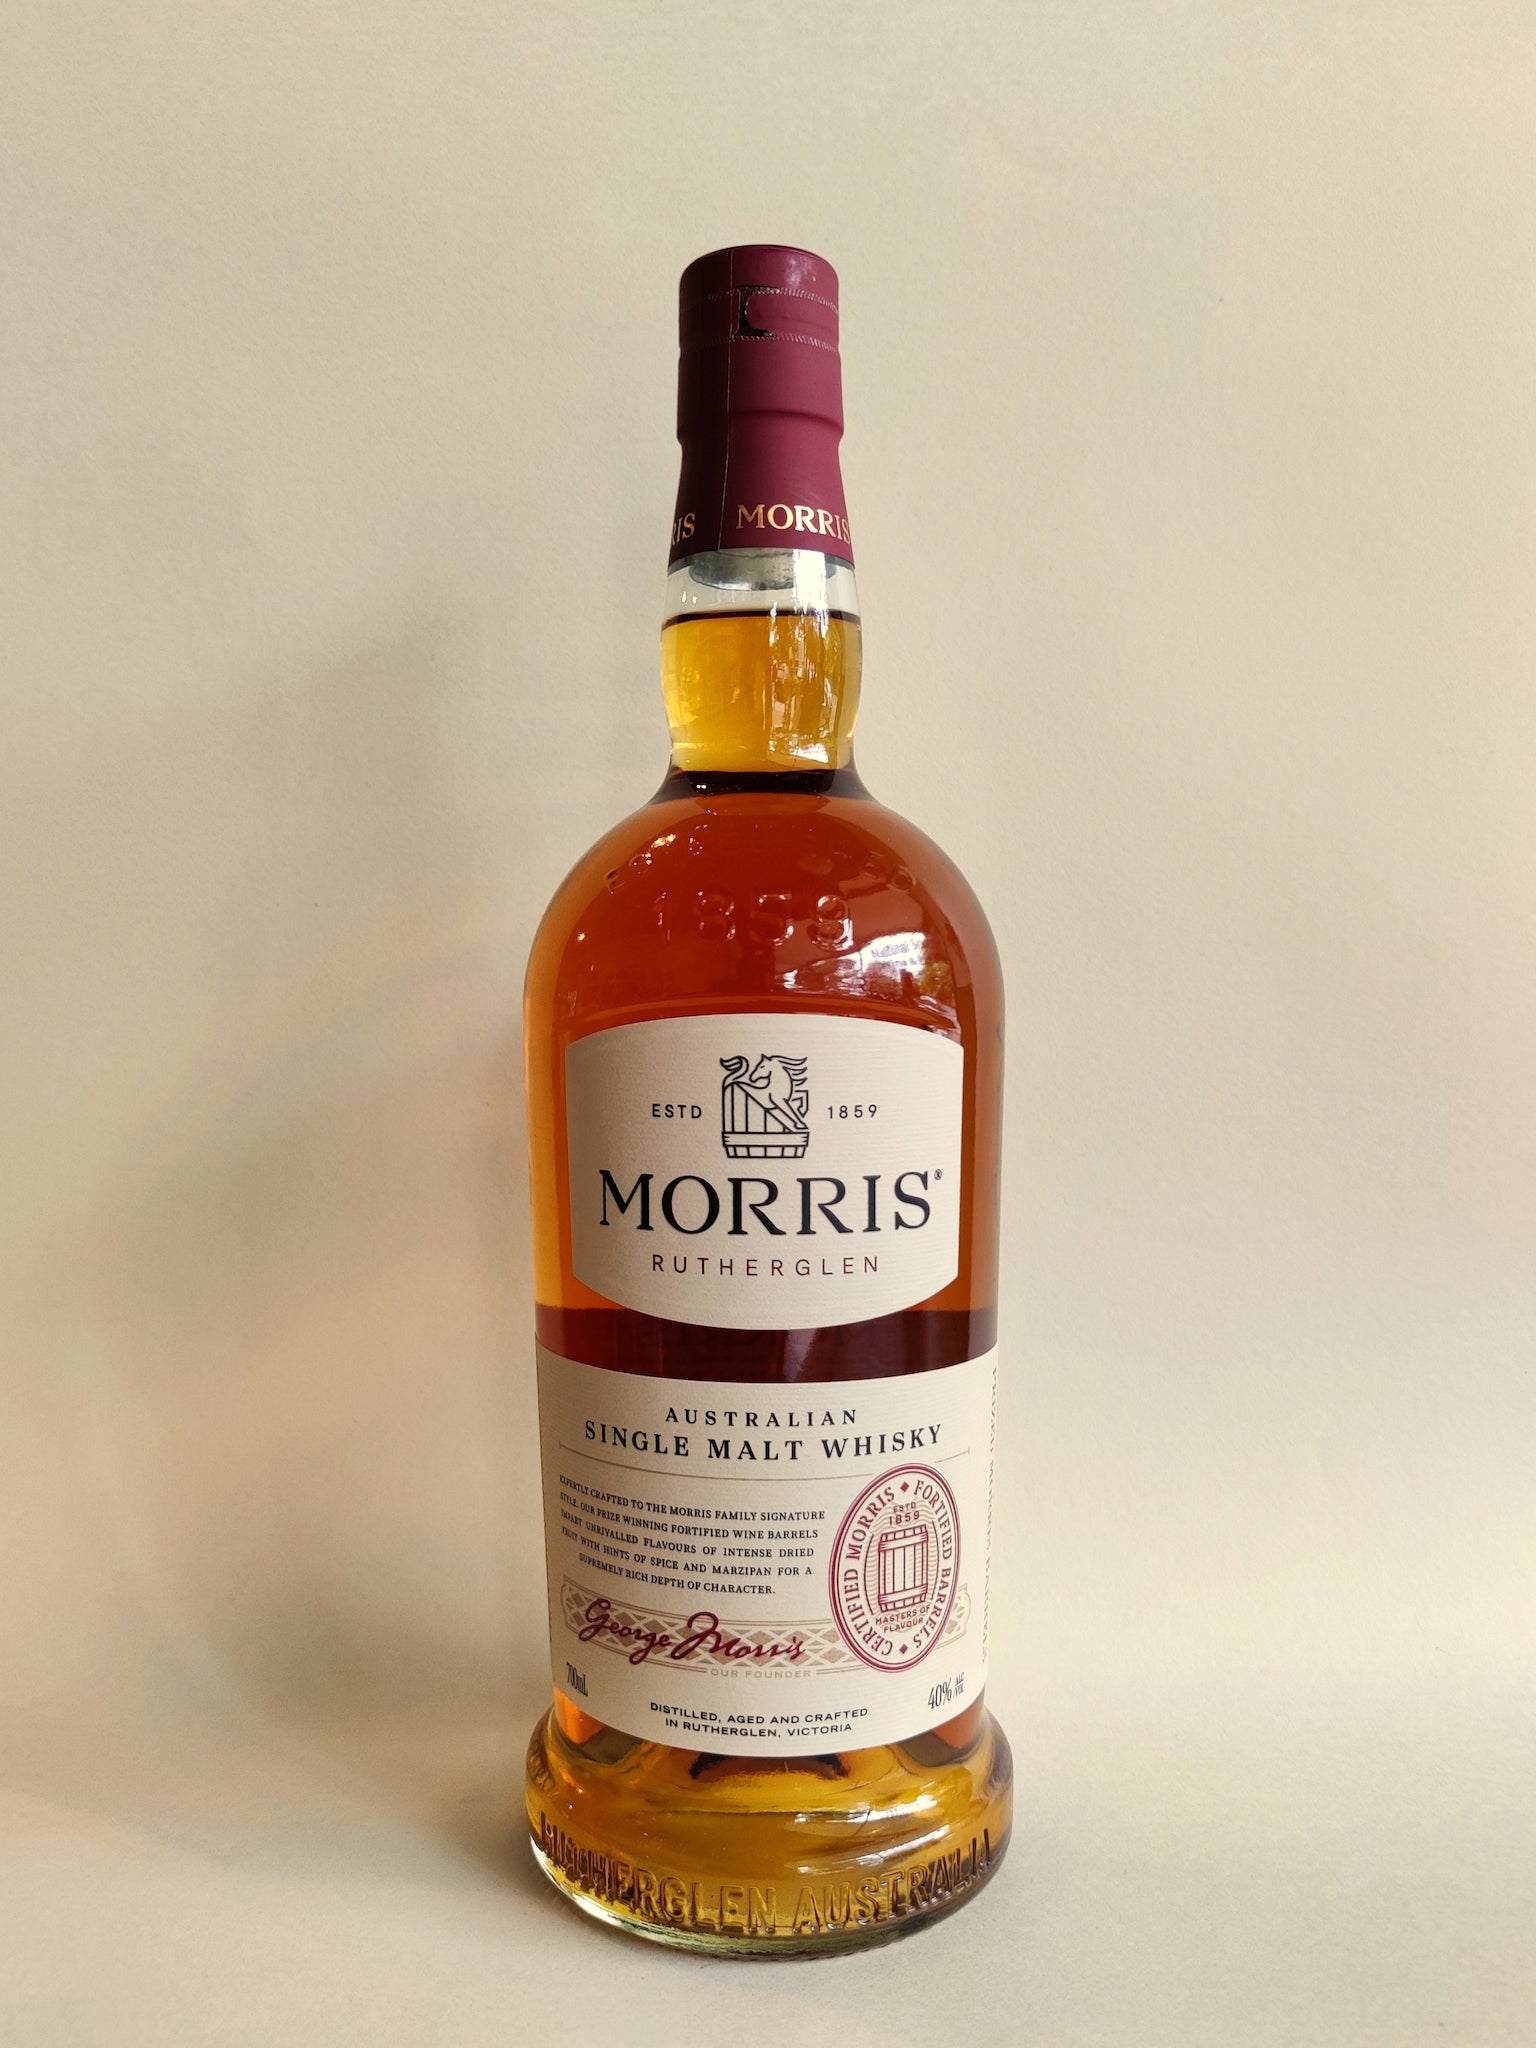 Morris Signature Single Malt Whisky from Rutherglen, Victoria.